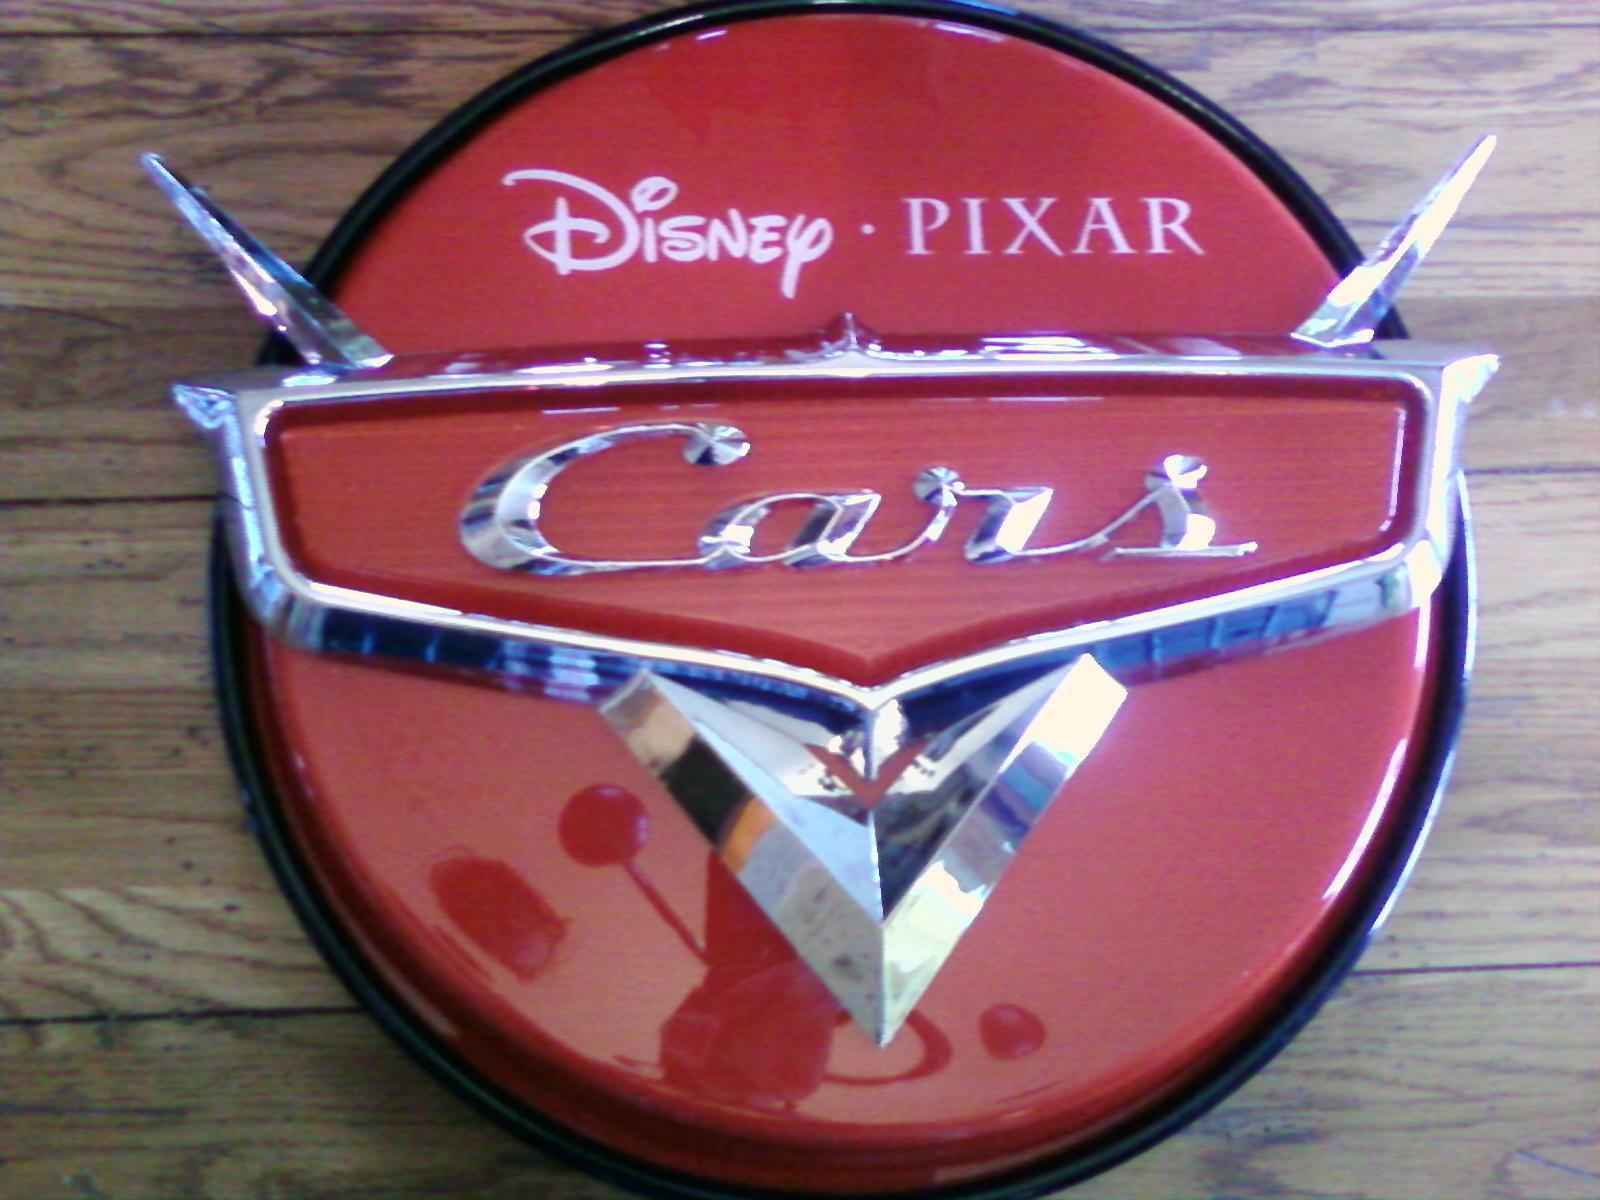 Disney Cars 1 Logo - DMR exclusive Cars logo sign. I finally got it. This